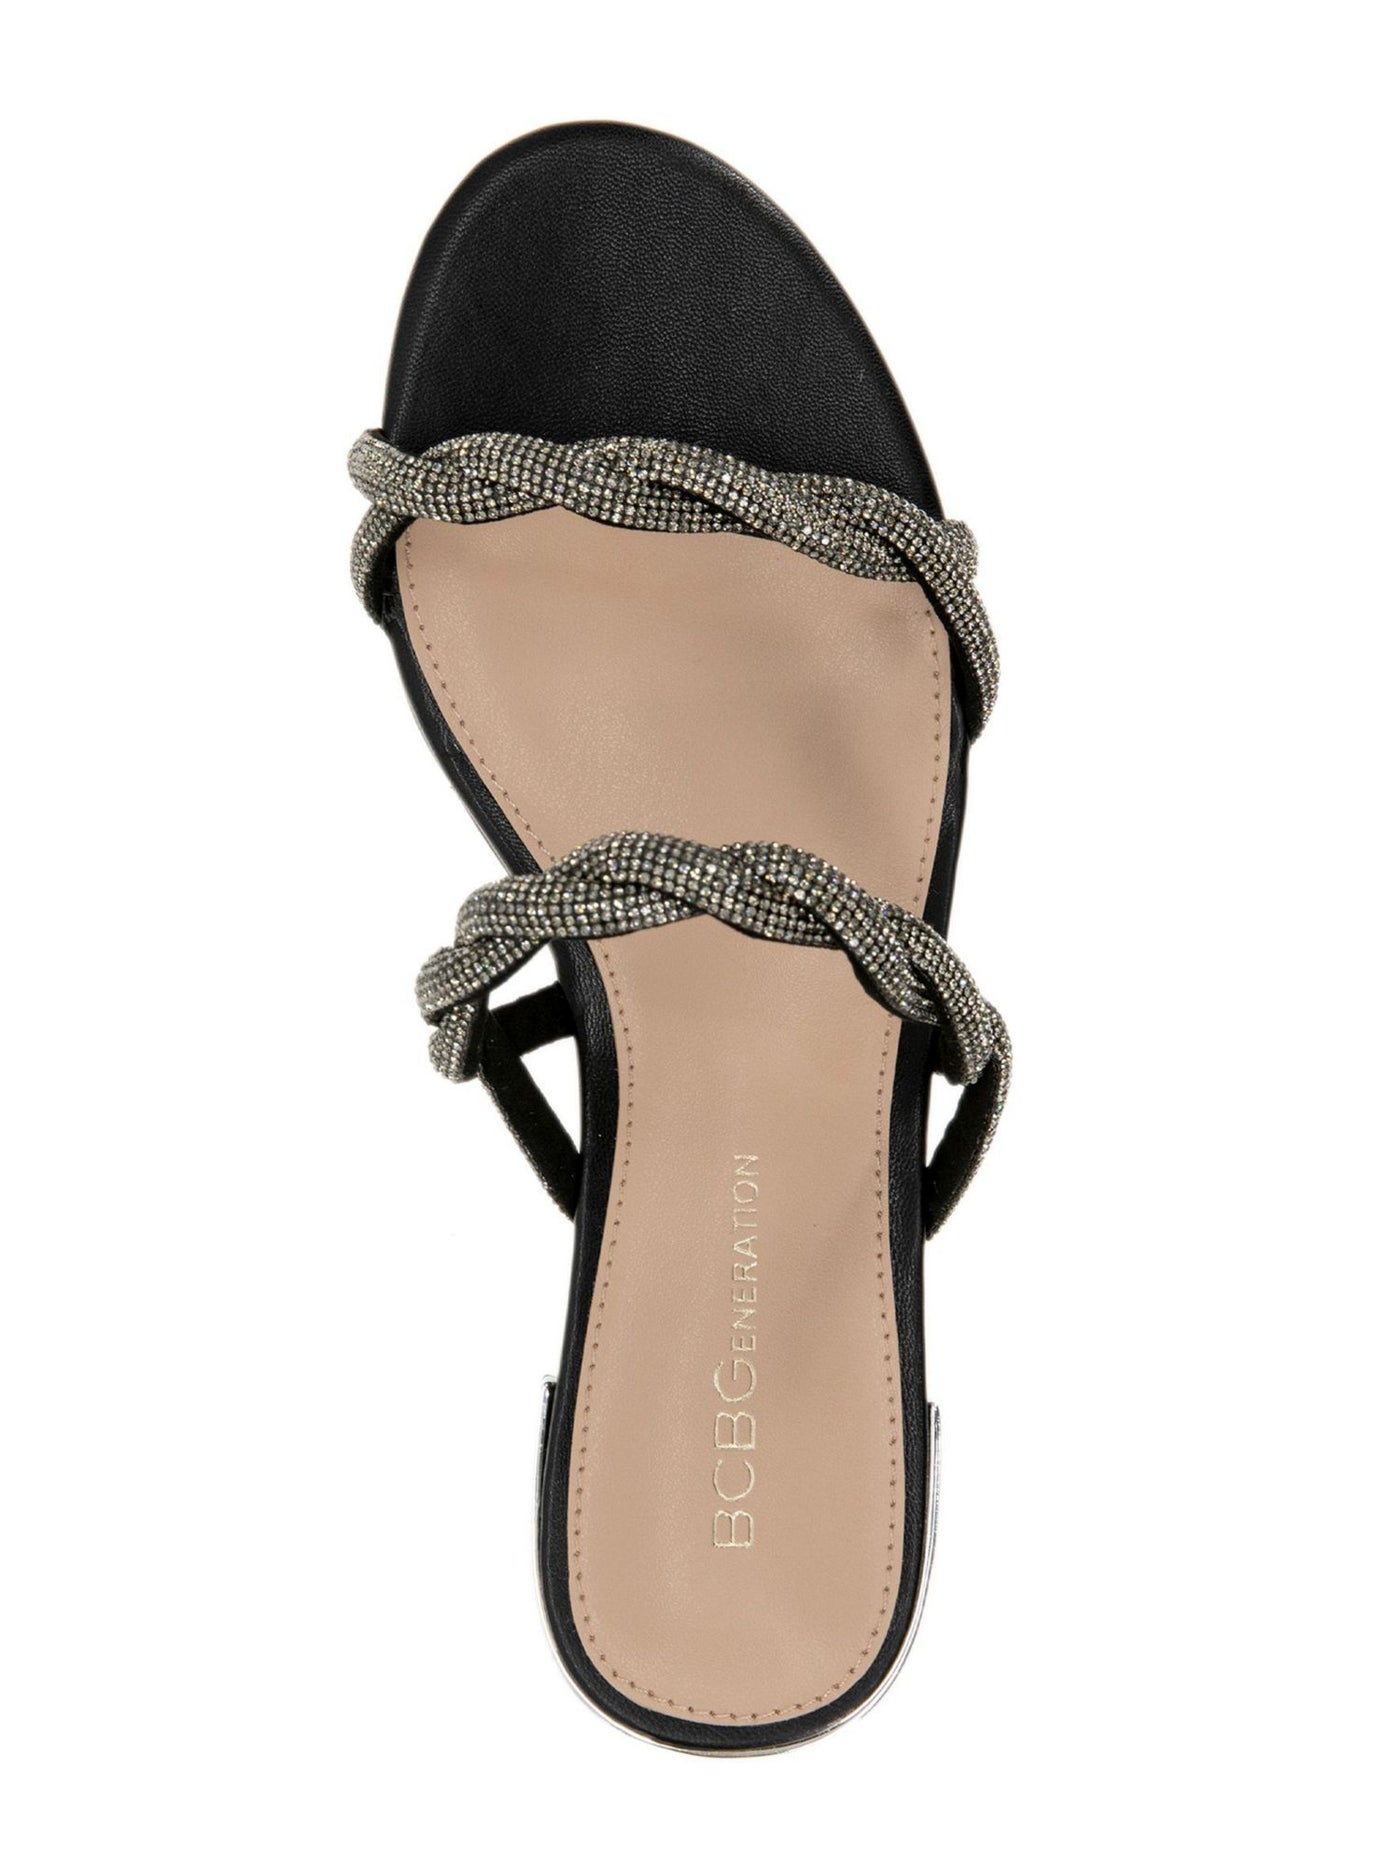 BCBGENERATION Womens Black Embellished Strappy Dastin Round Toe Block Heel Slip On Slide Sandals Shoes 8.5